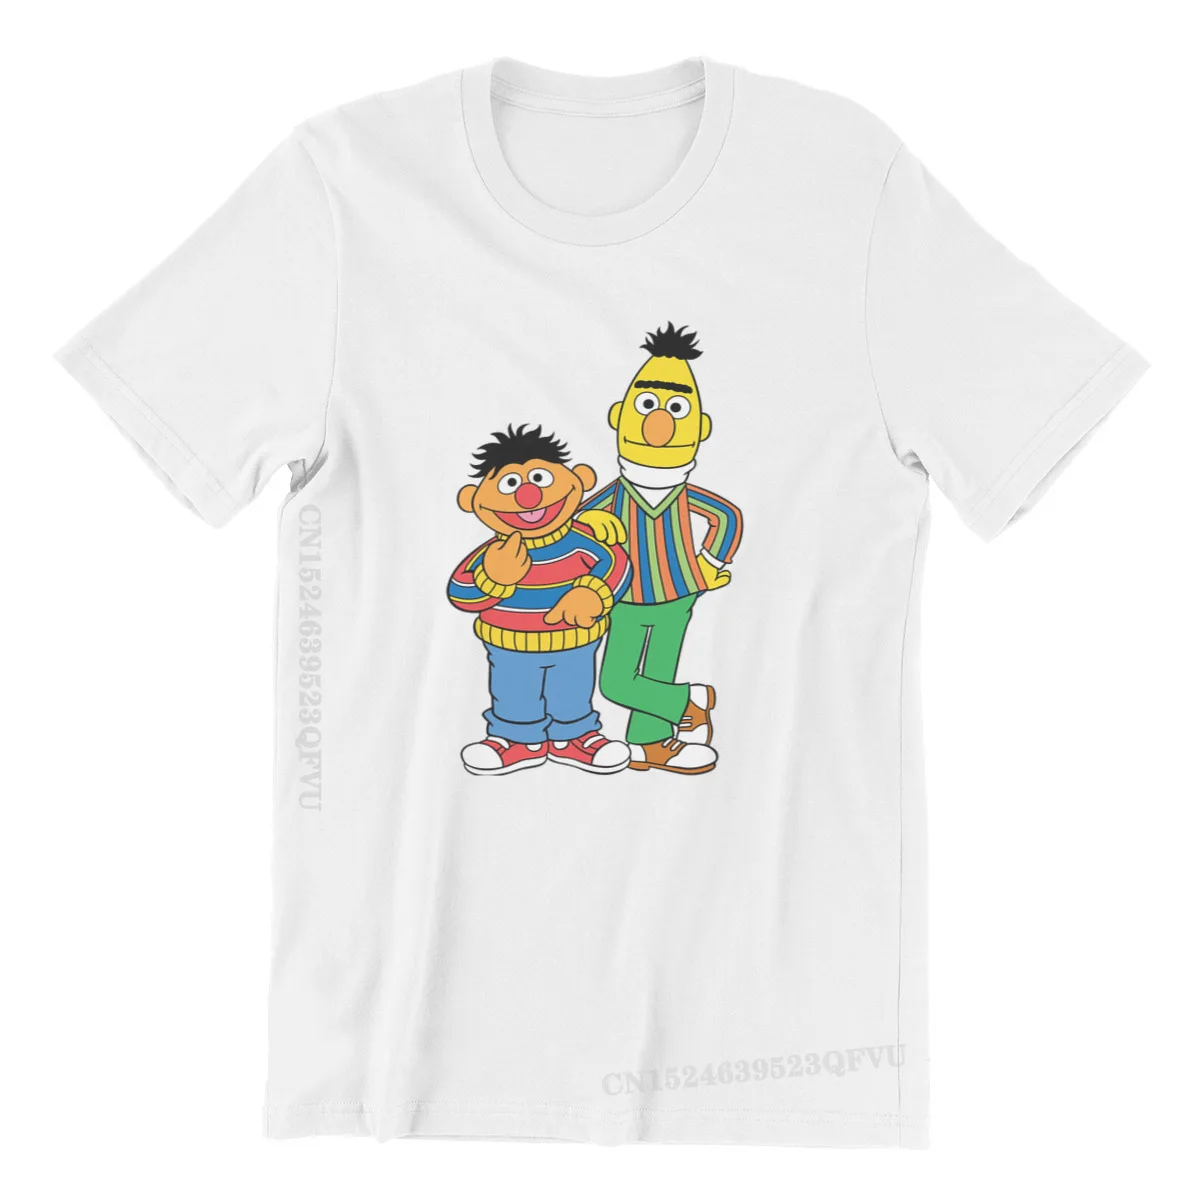 Sesame Street 80s Series Friends Tshirts Top Graphic Men Classic Grunge Camisas Men Cotton Harajuku T Shirt